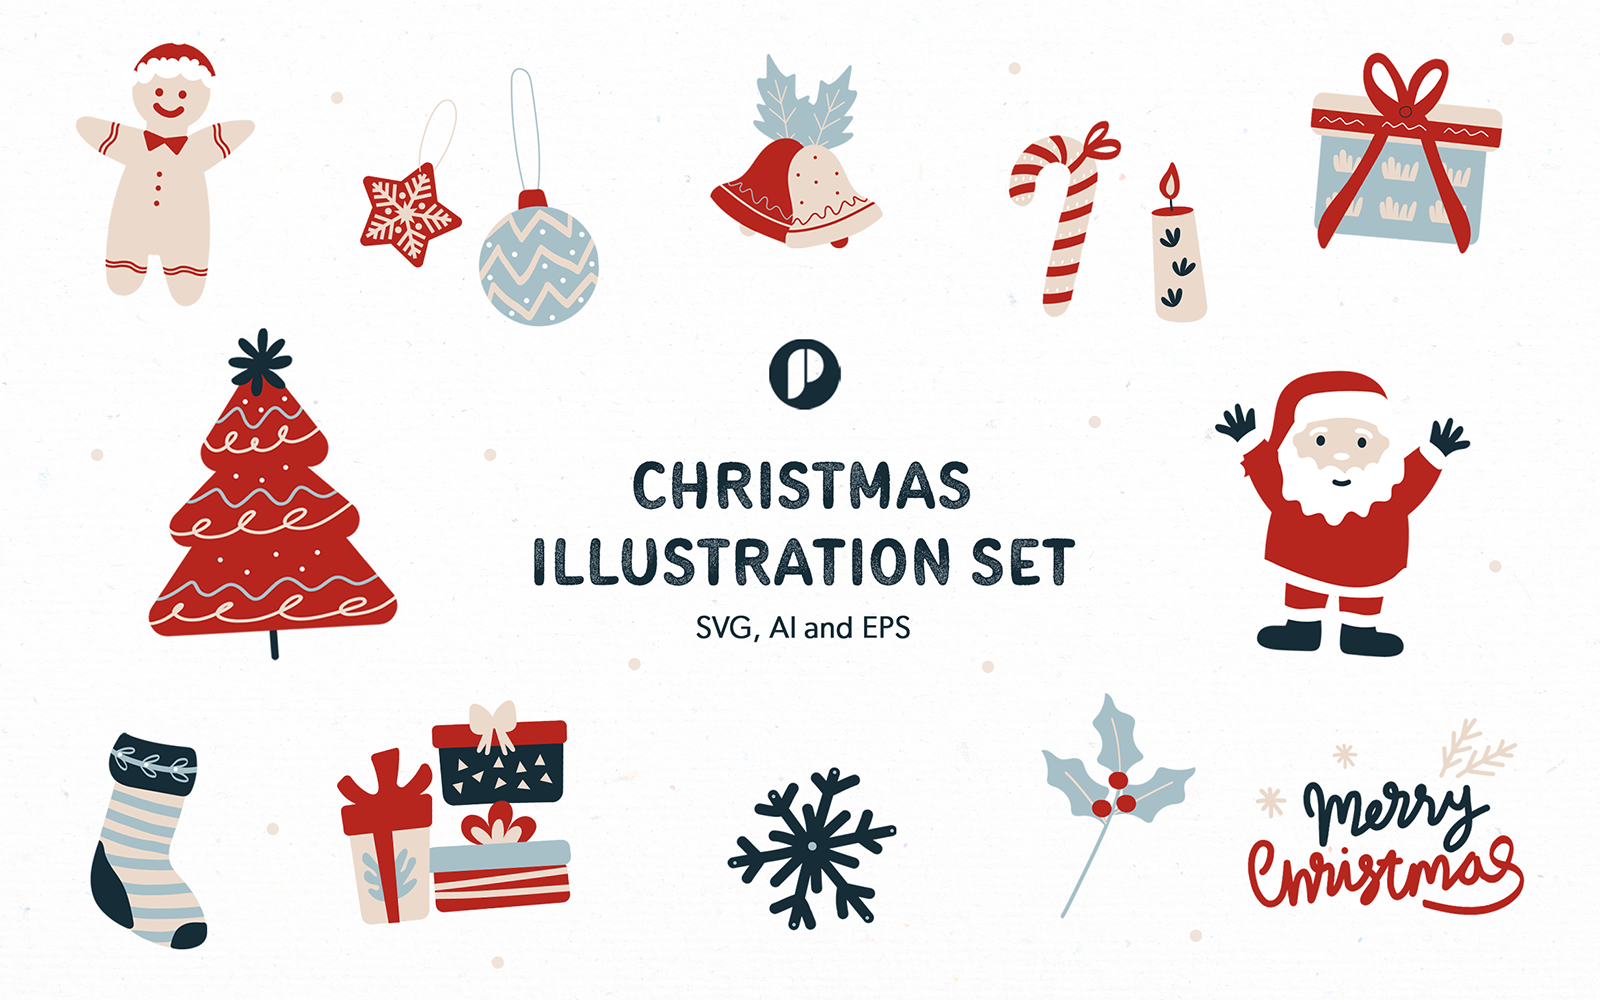 Warm and Joyful Christmas Illustration Set